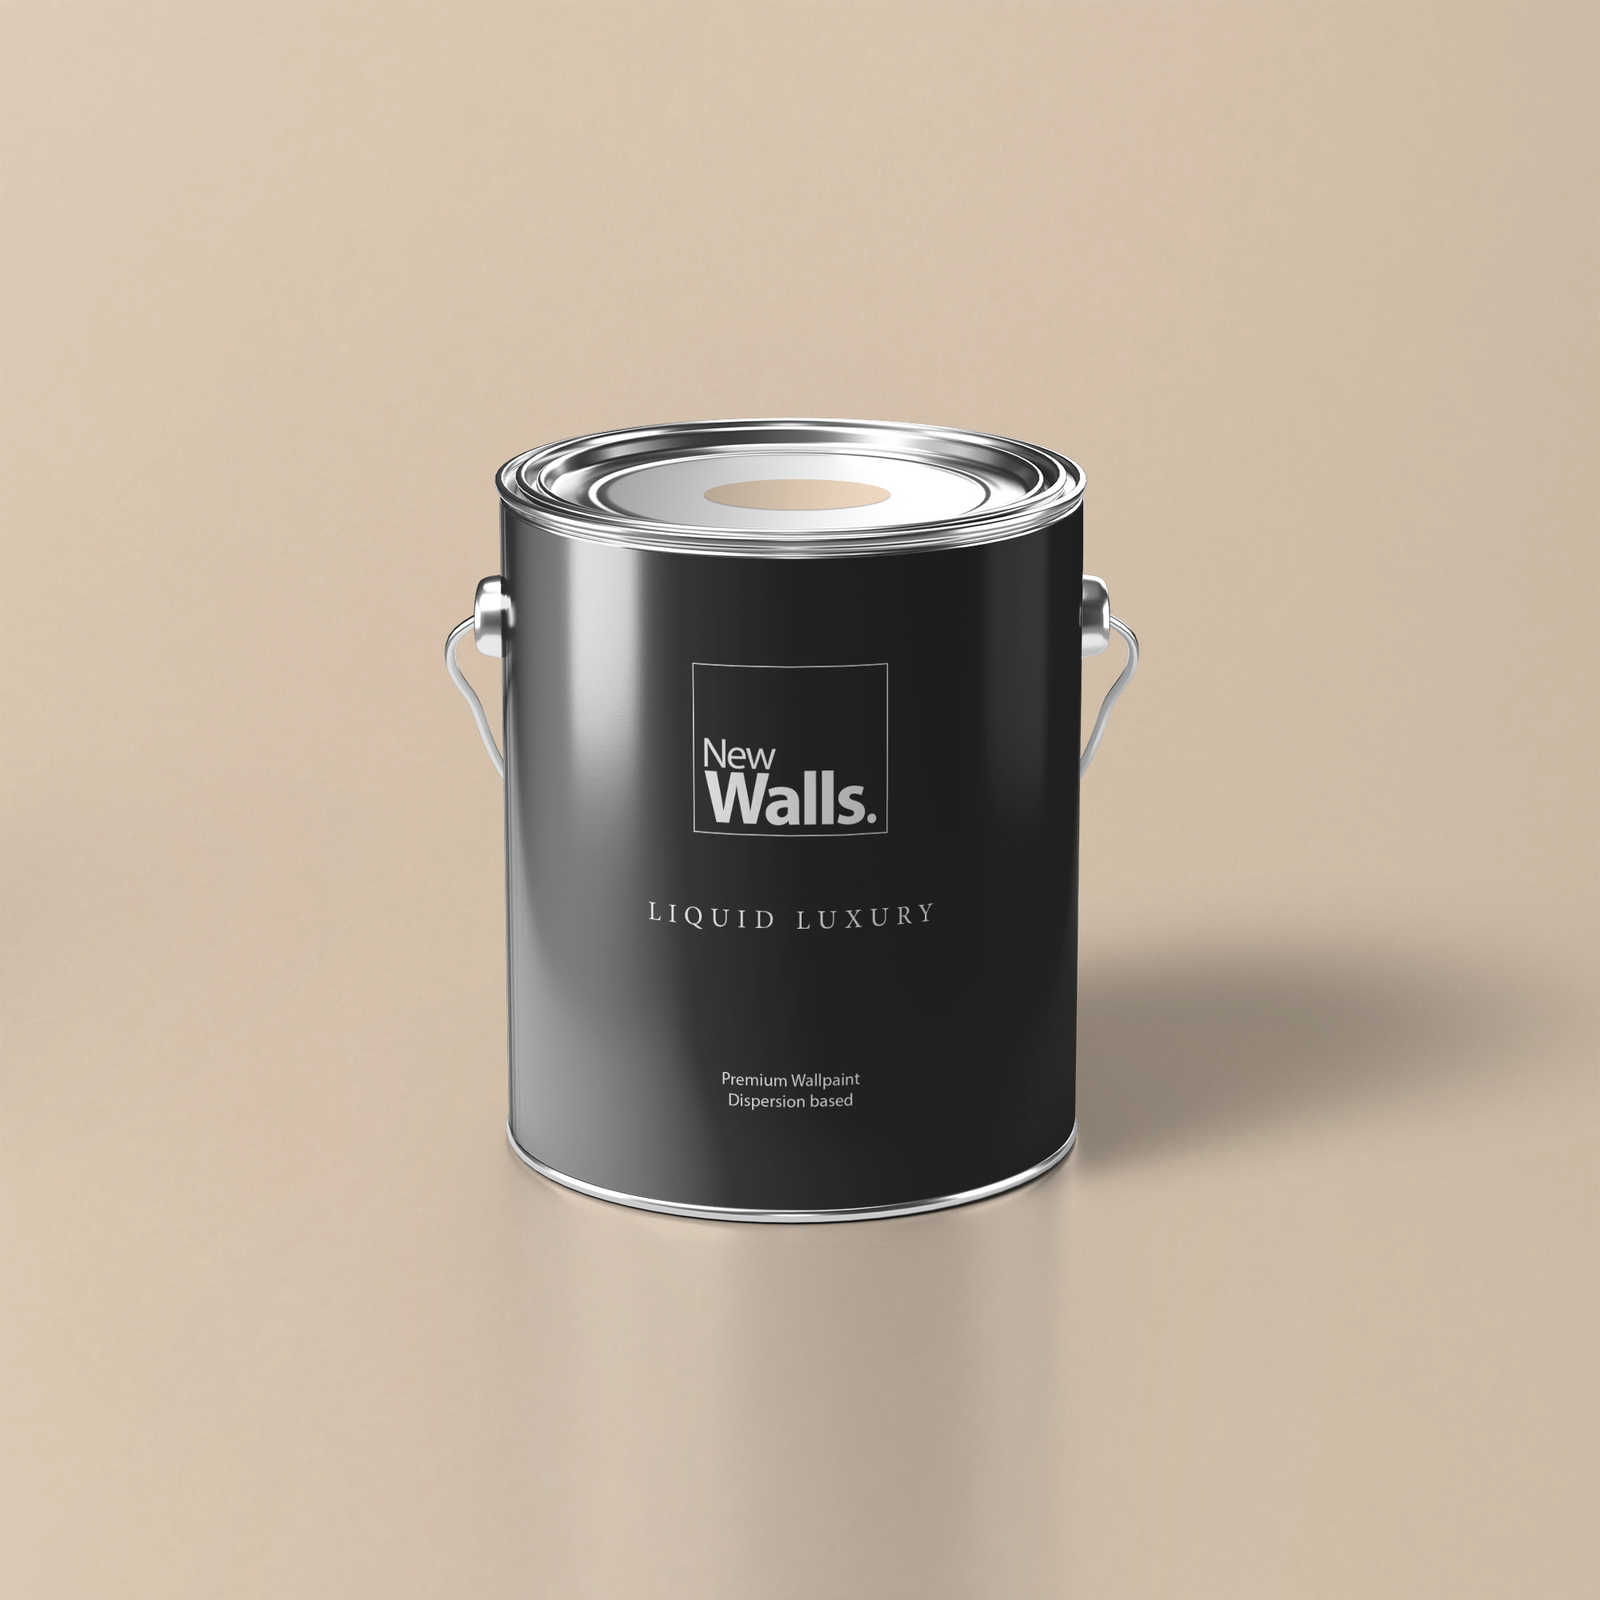 Premium Wall Paint Soft Light Beige »Pretty Peach« NW900 – 5 litre
